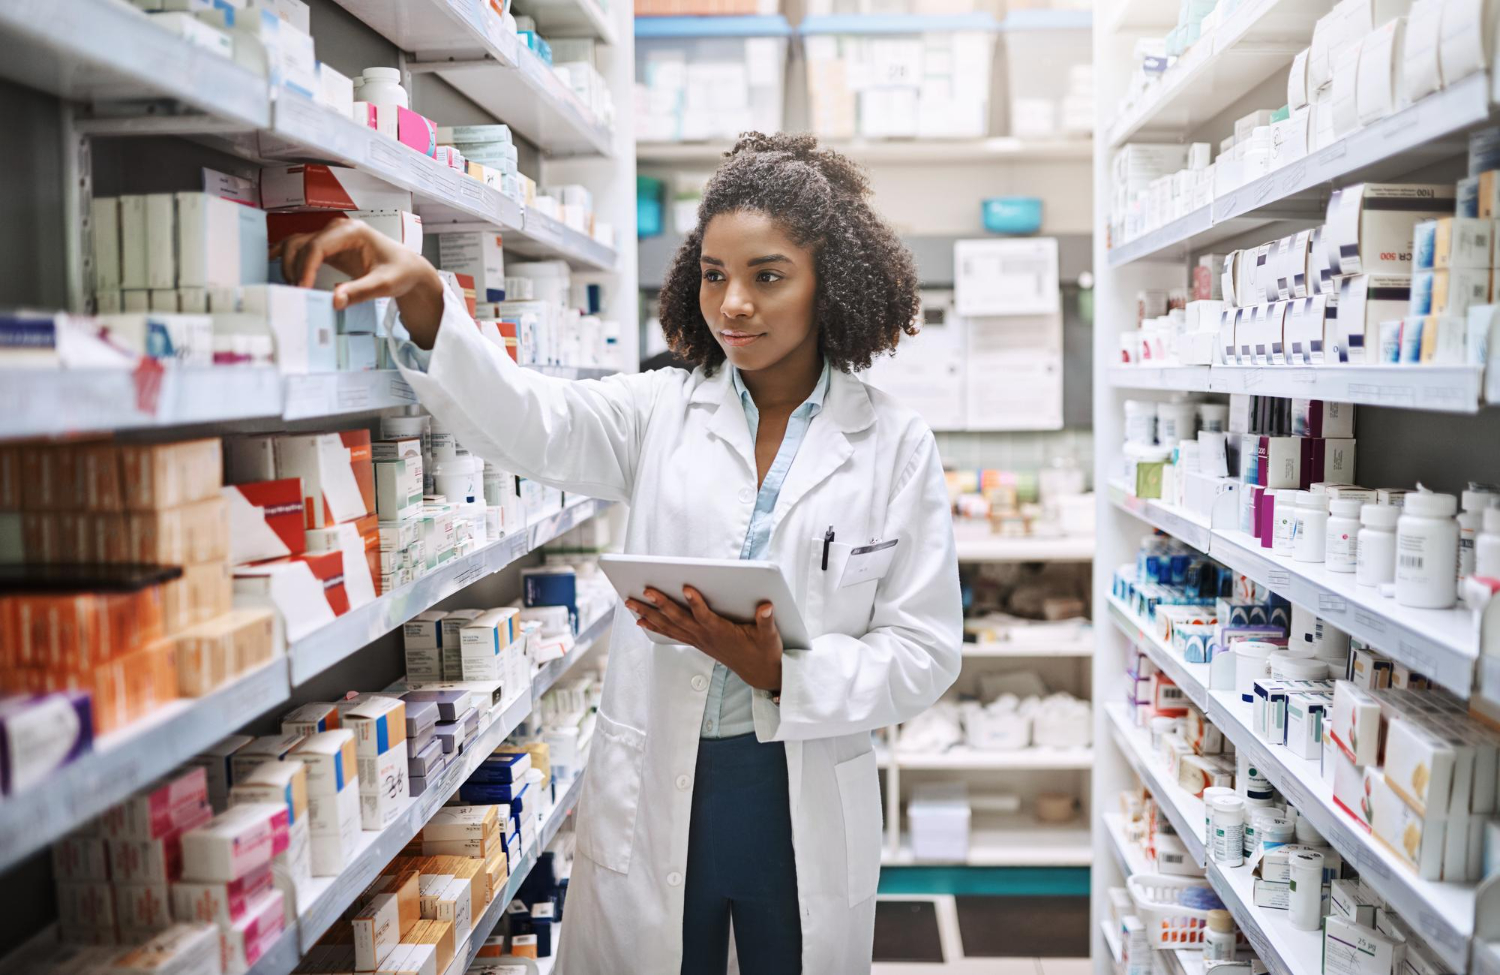 Qual a importância do armazenamento de medicamentos ANVISA?